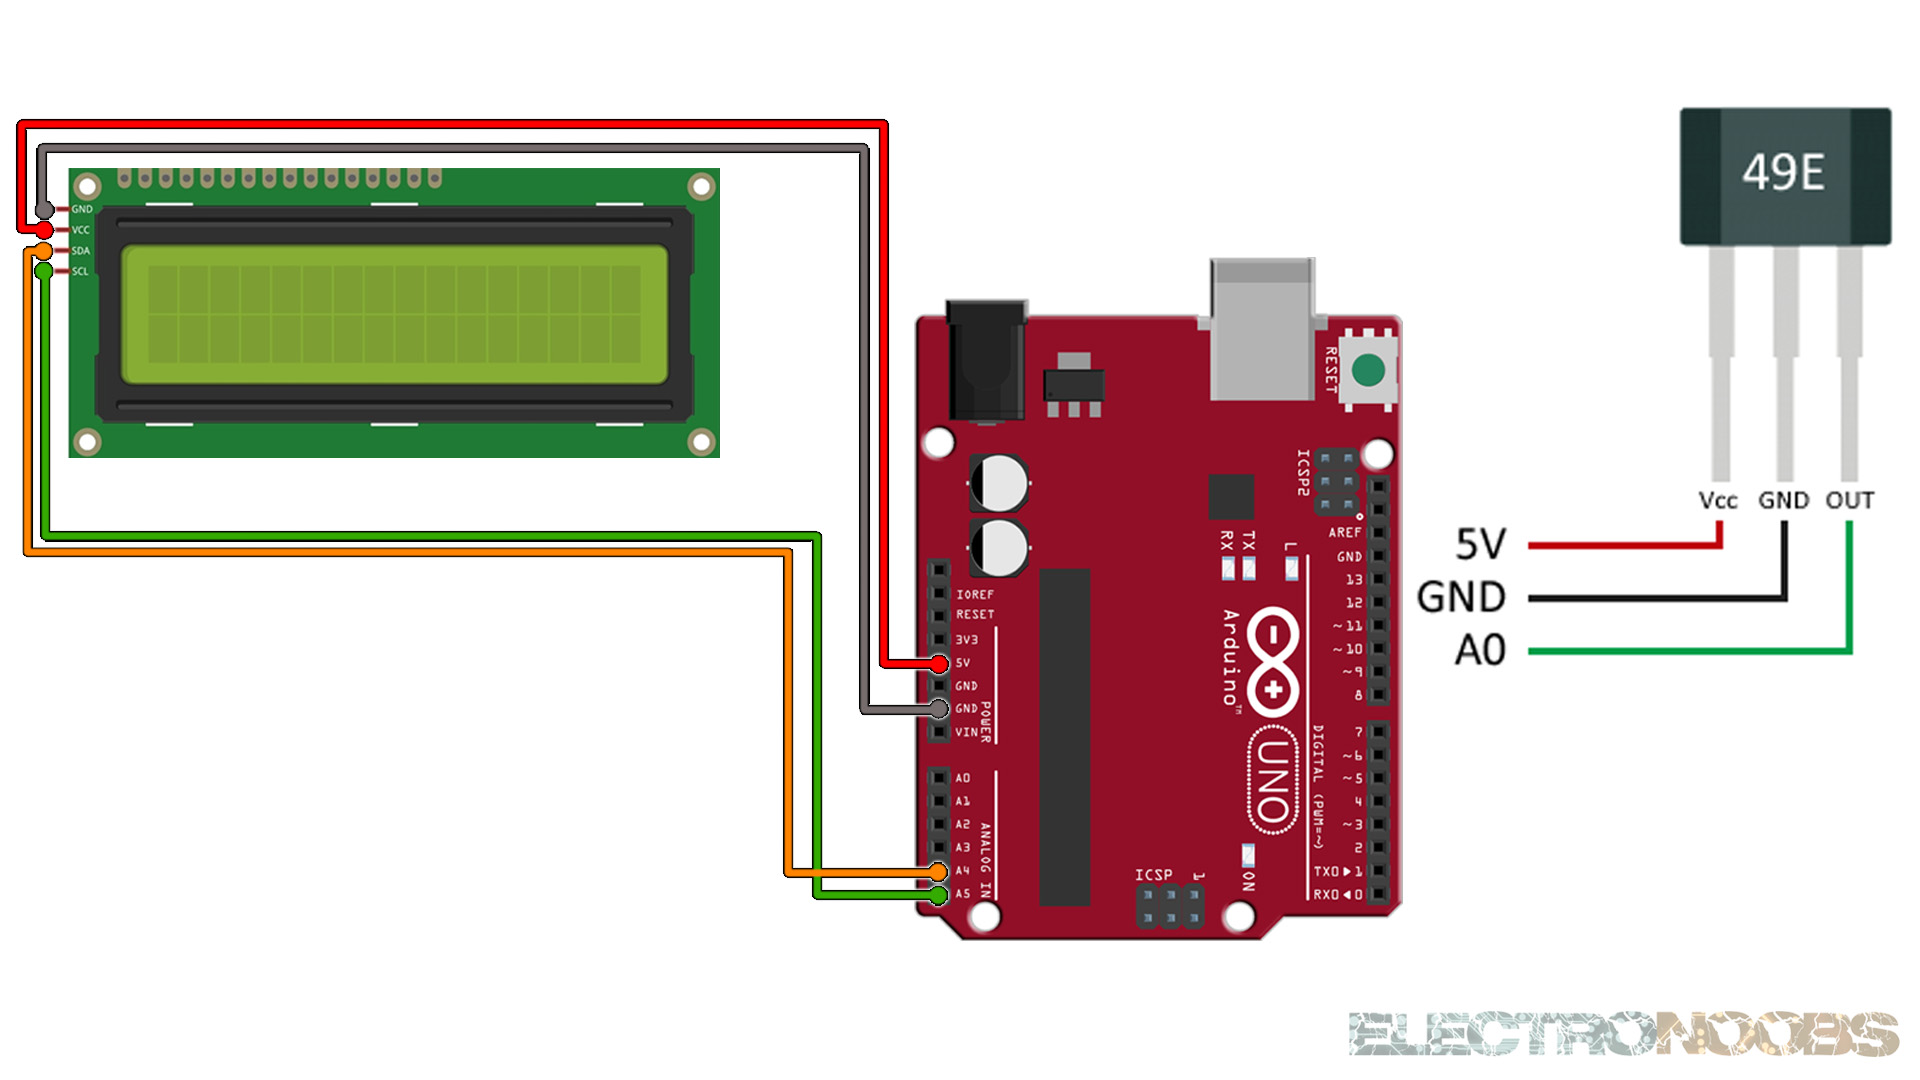 49E hall sensor Arduino connection schematic